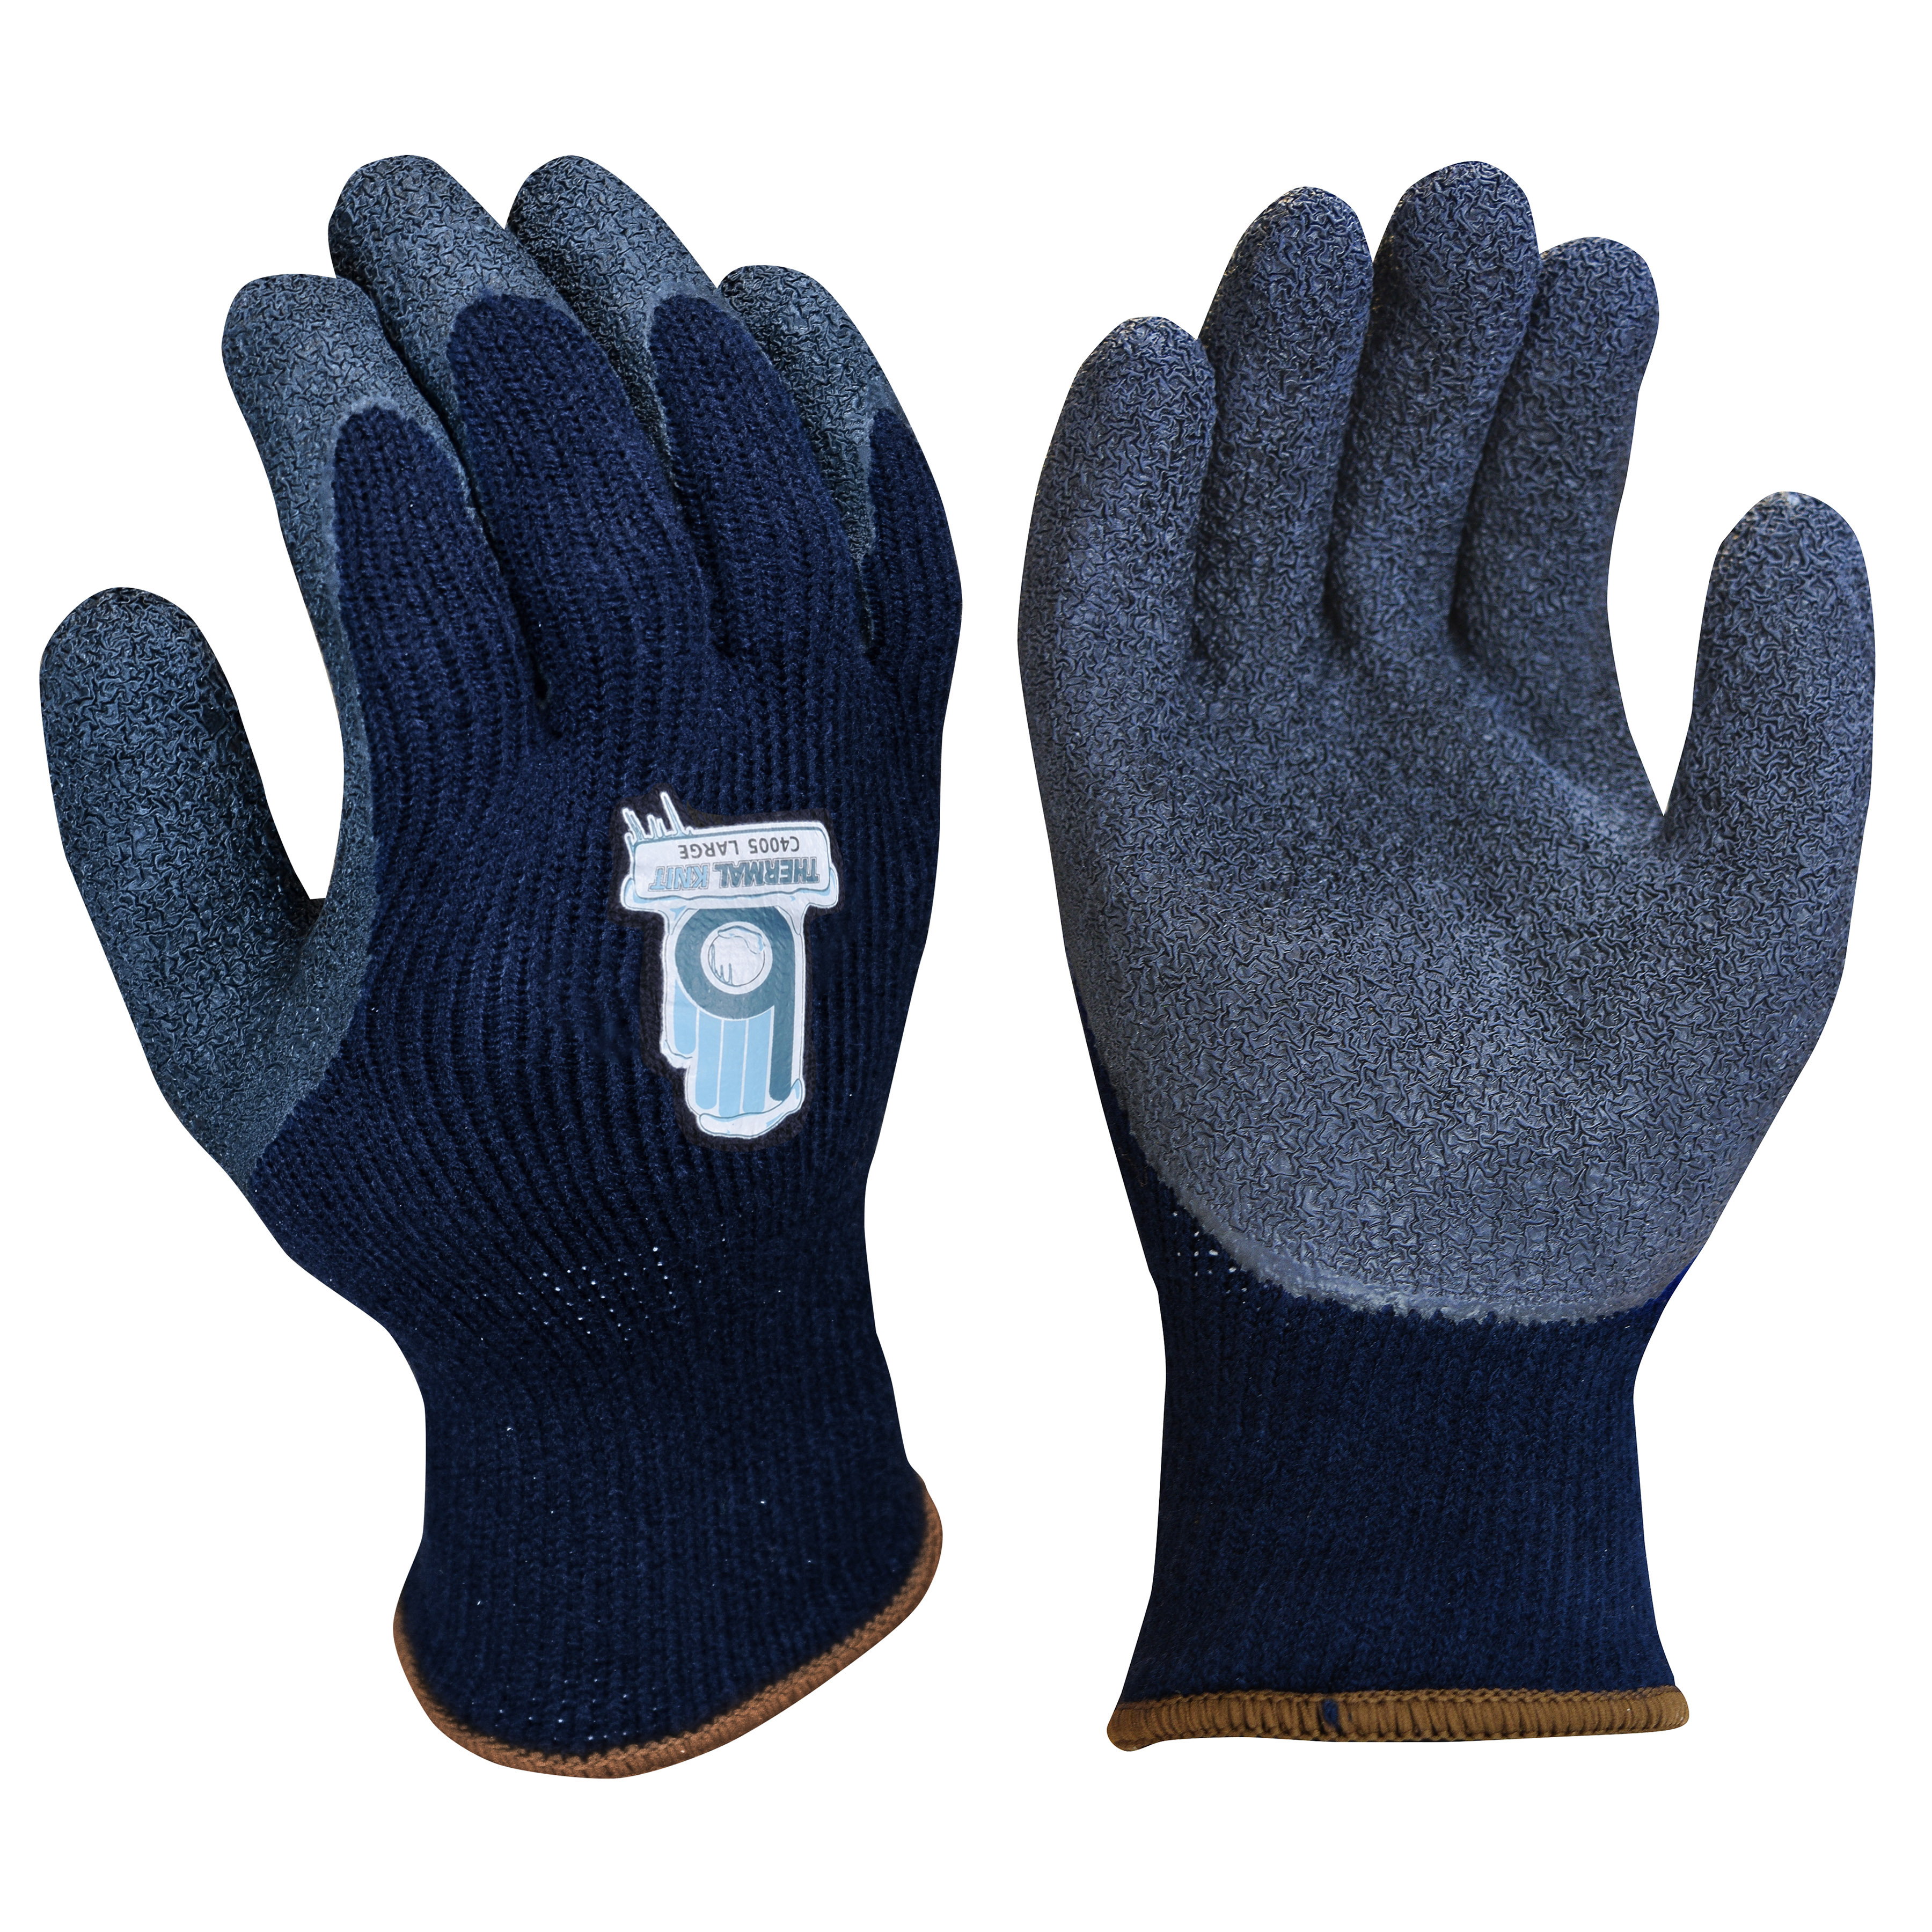 Bellingham C4005 XHD Thermal Knit Glove